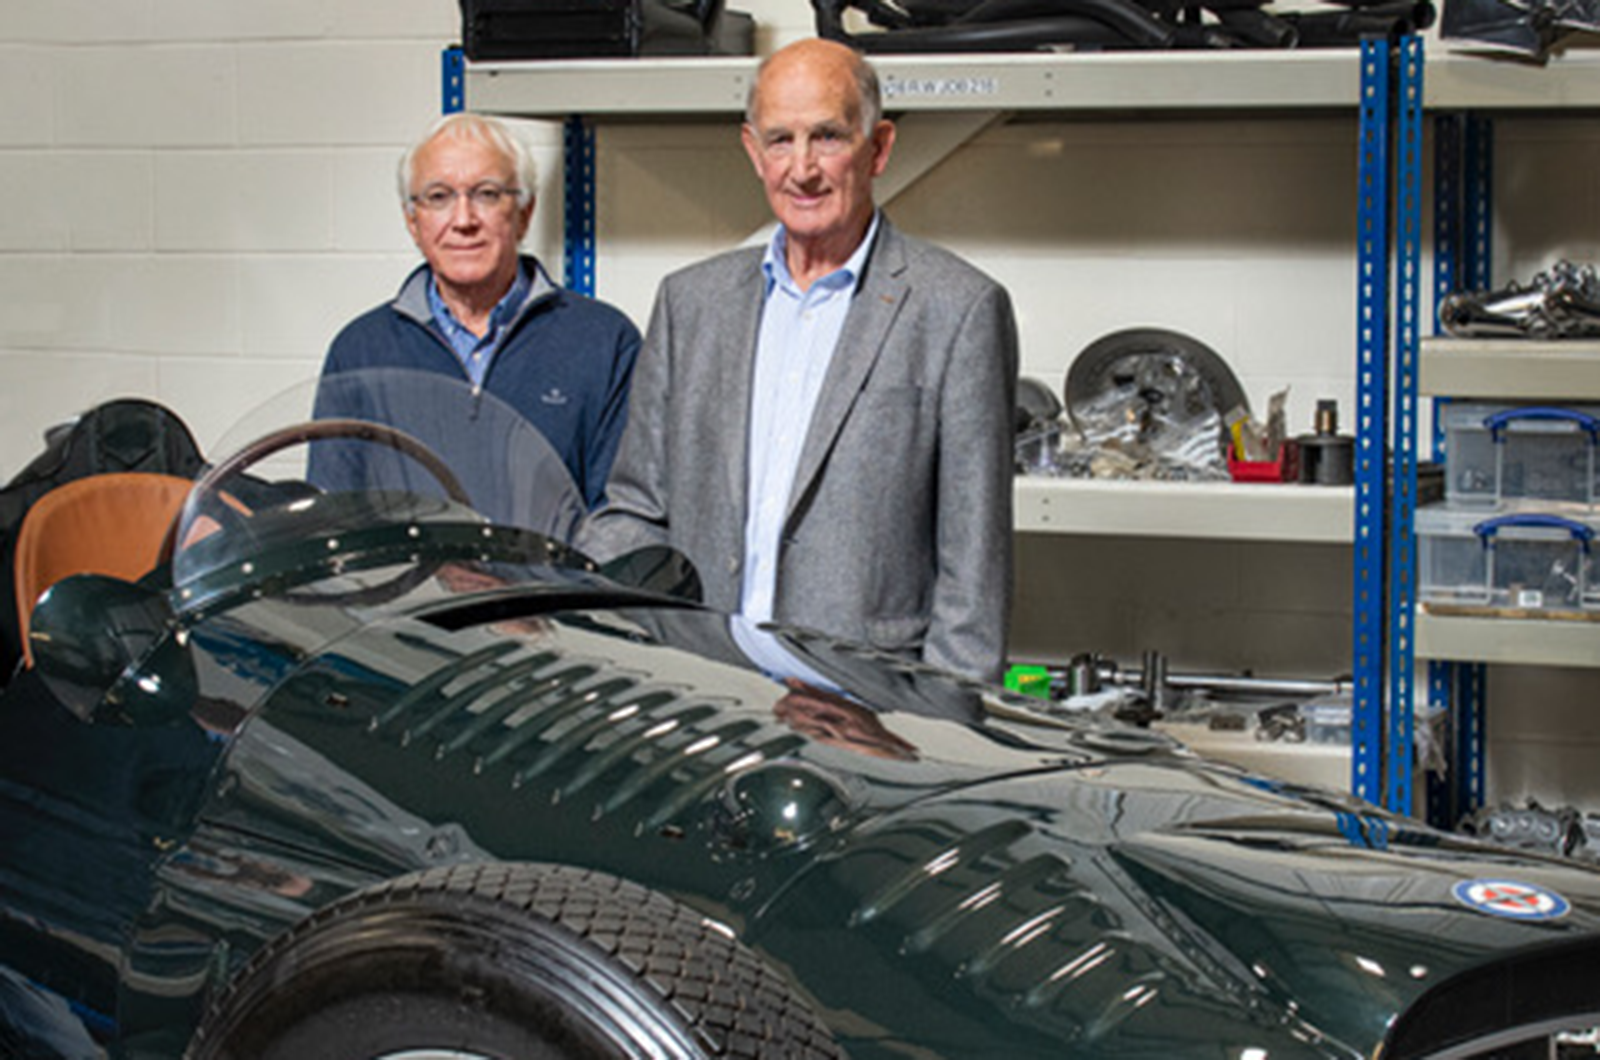 Classic & Sports Car – Three new BRMs mark the team’s 70th anniversary